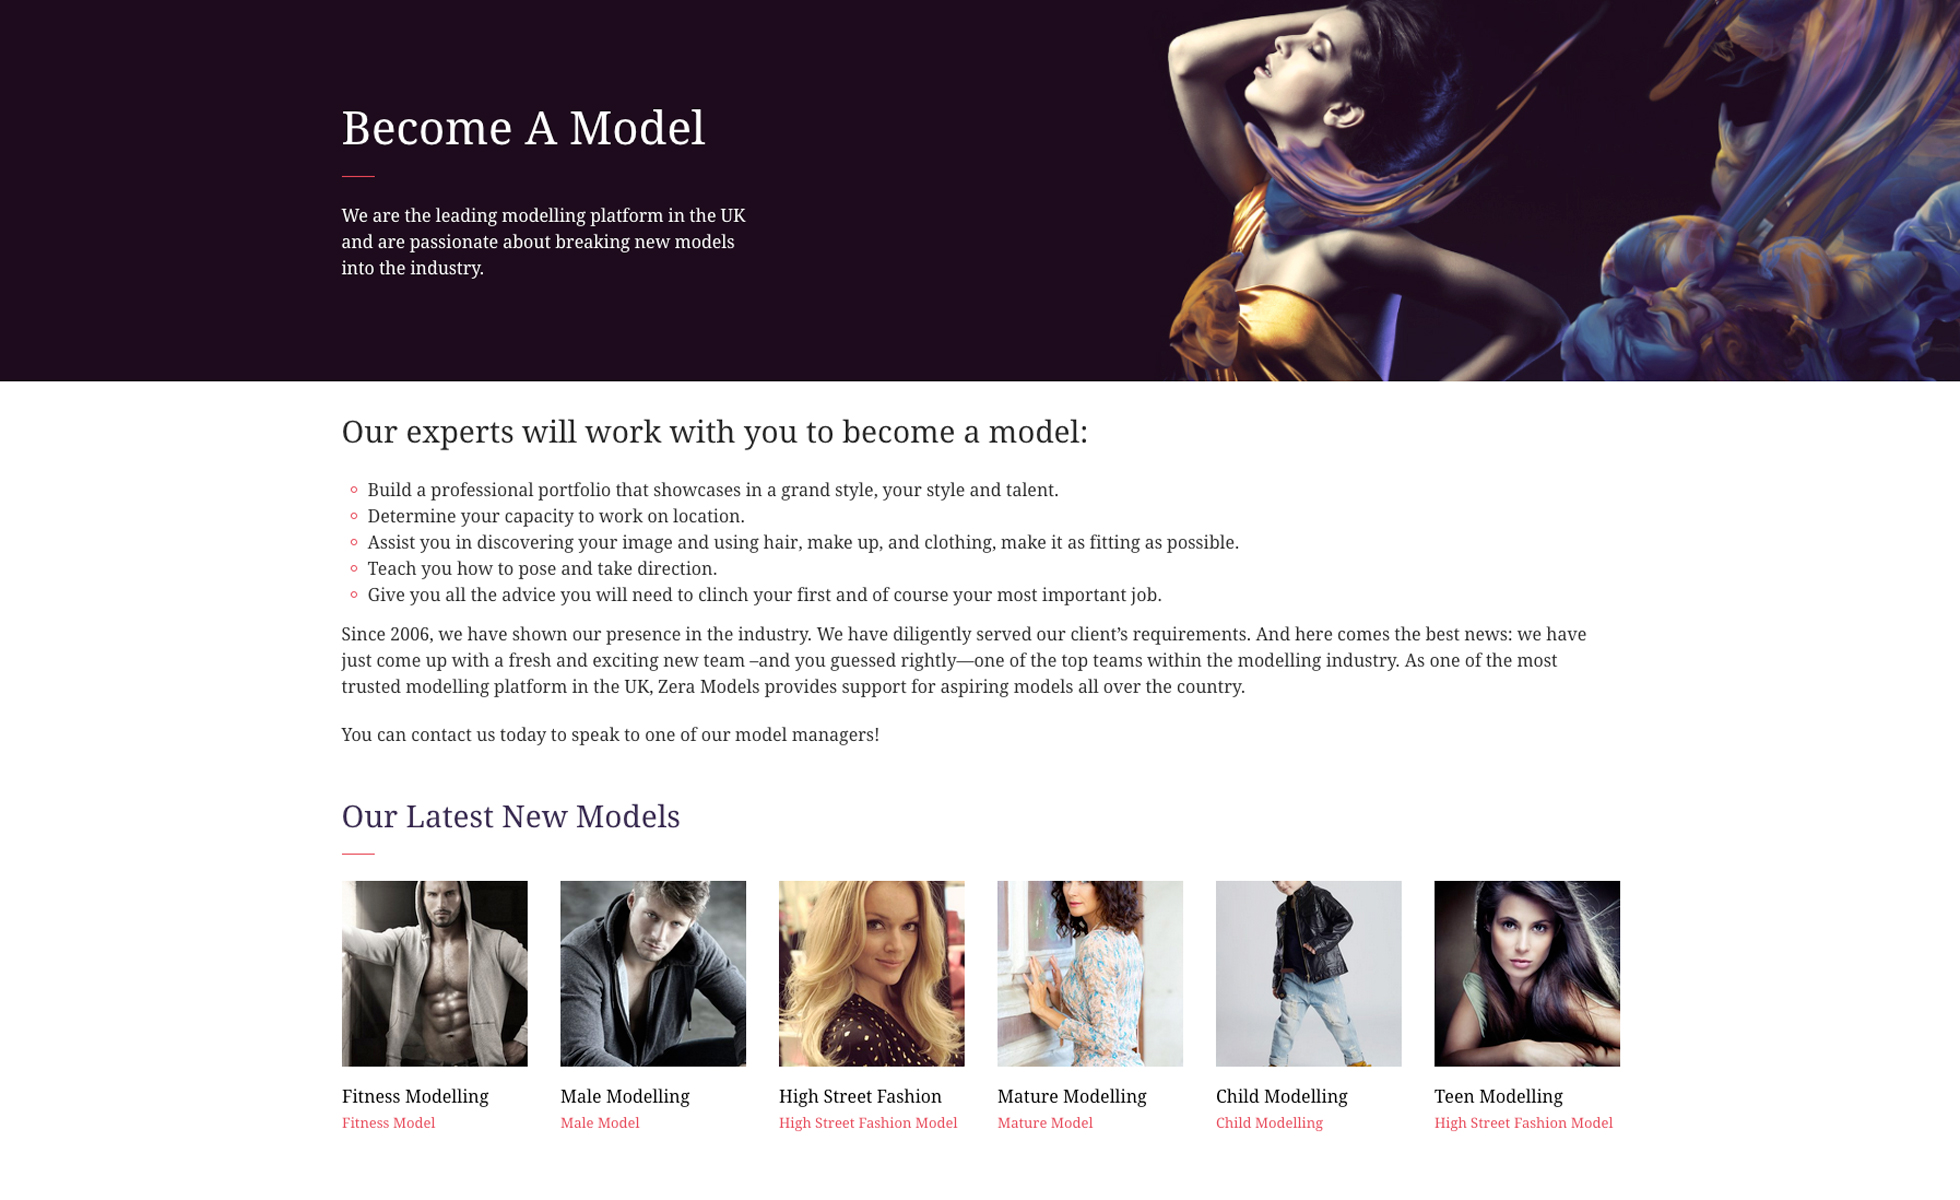 zera models website image 5